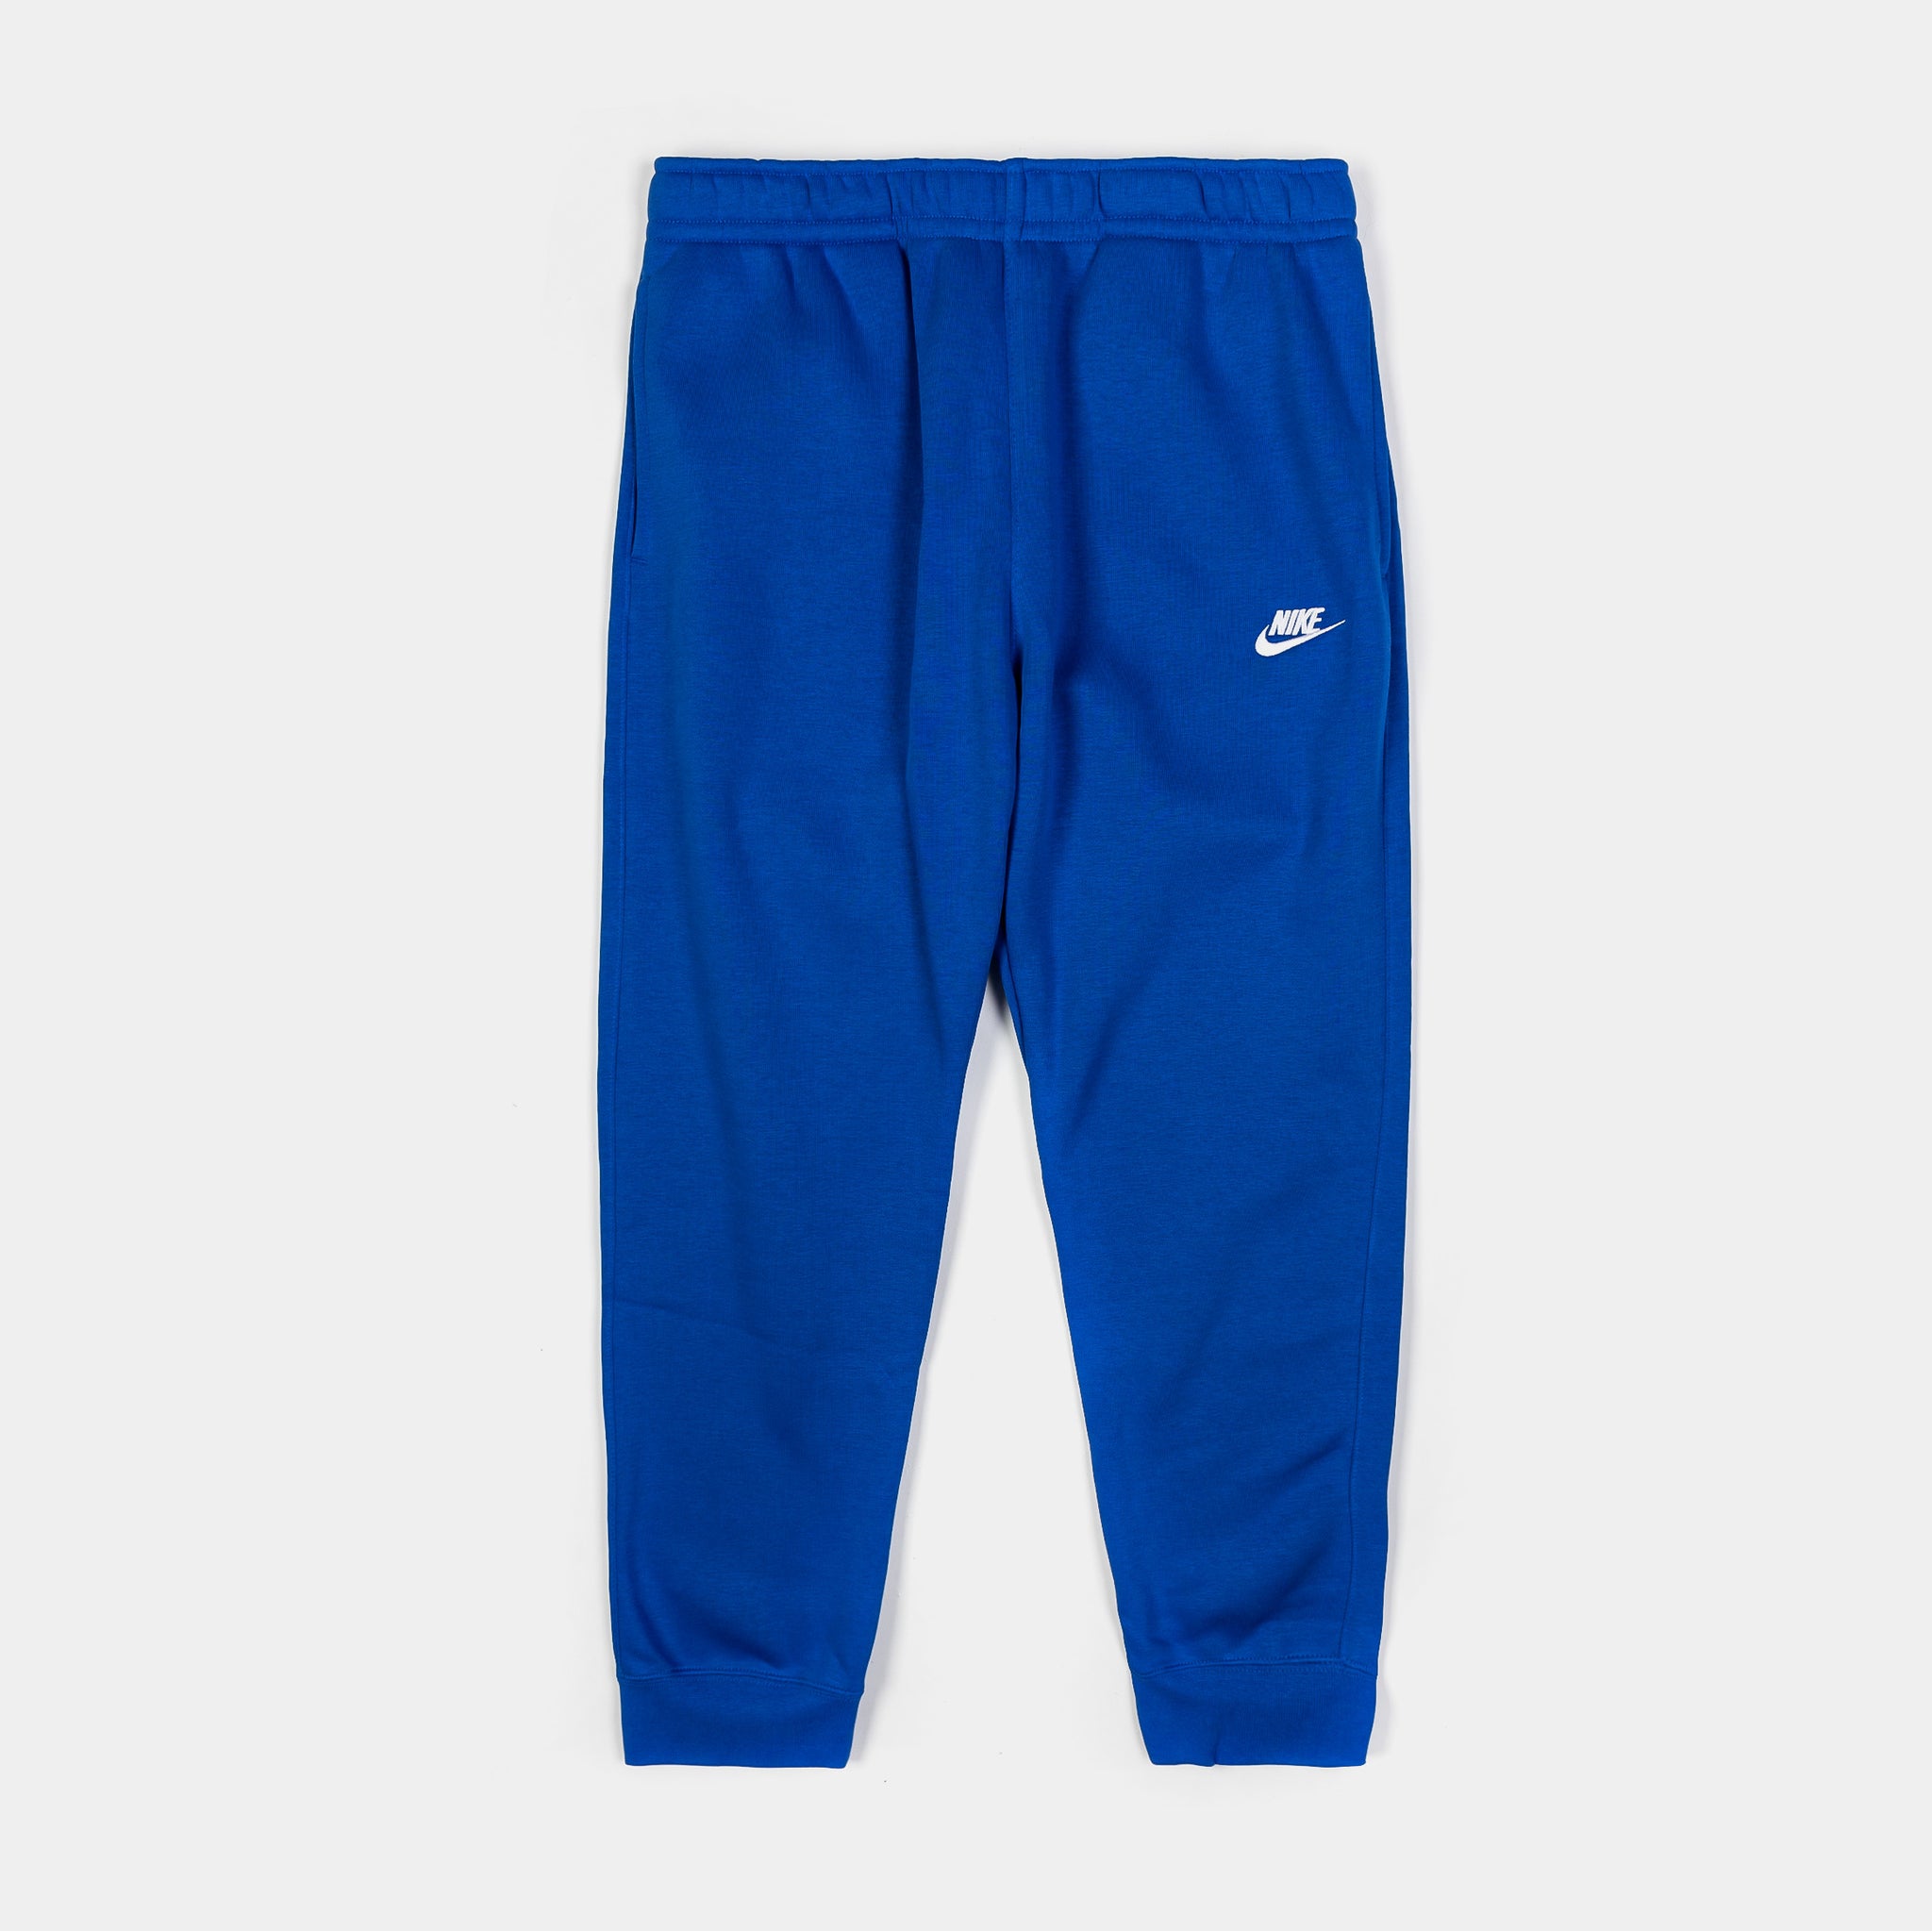 NSW Club Fleece Joggers Mens Pants (Blue/White)